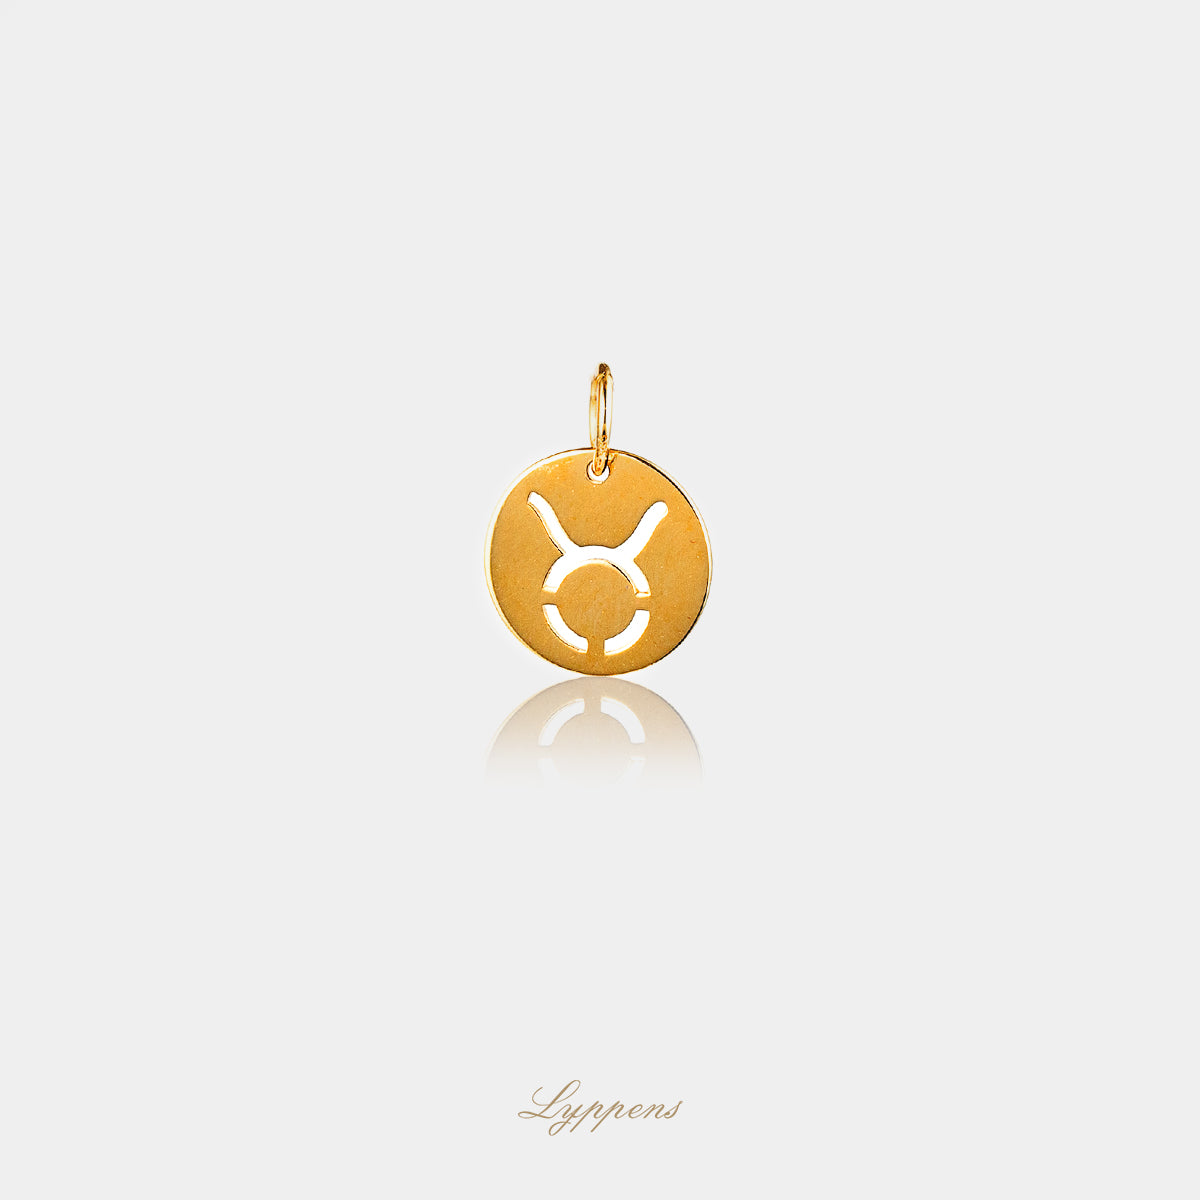 Yellow gold pendant "Taurus" constellation